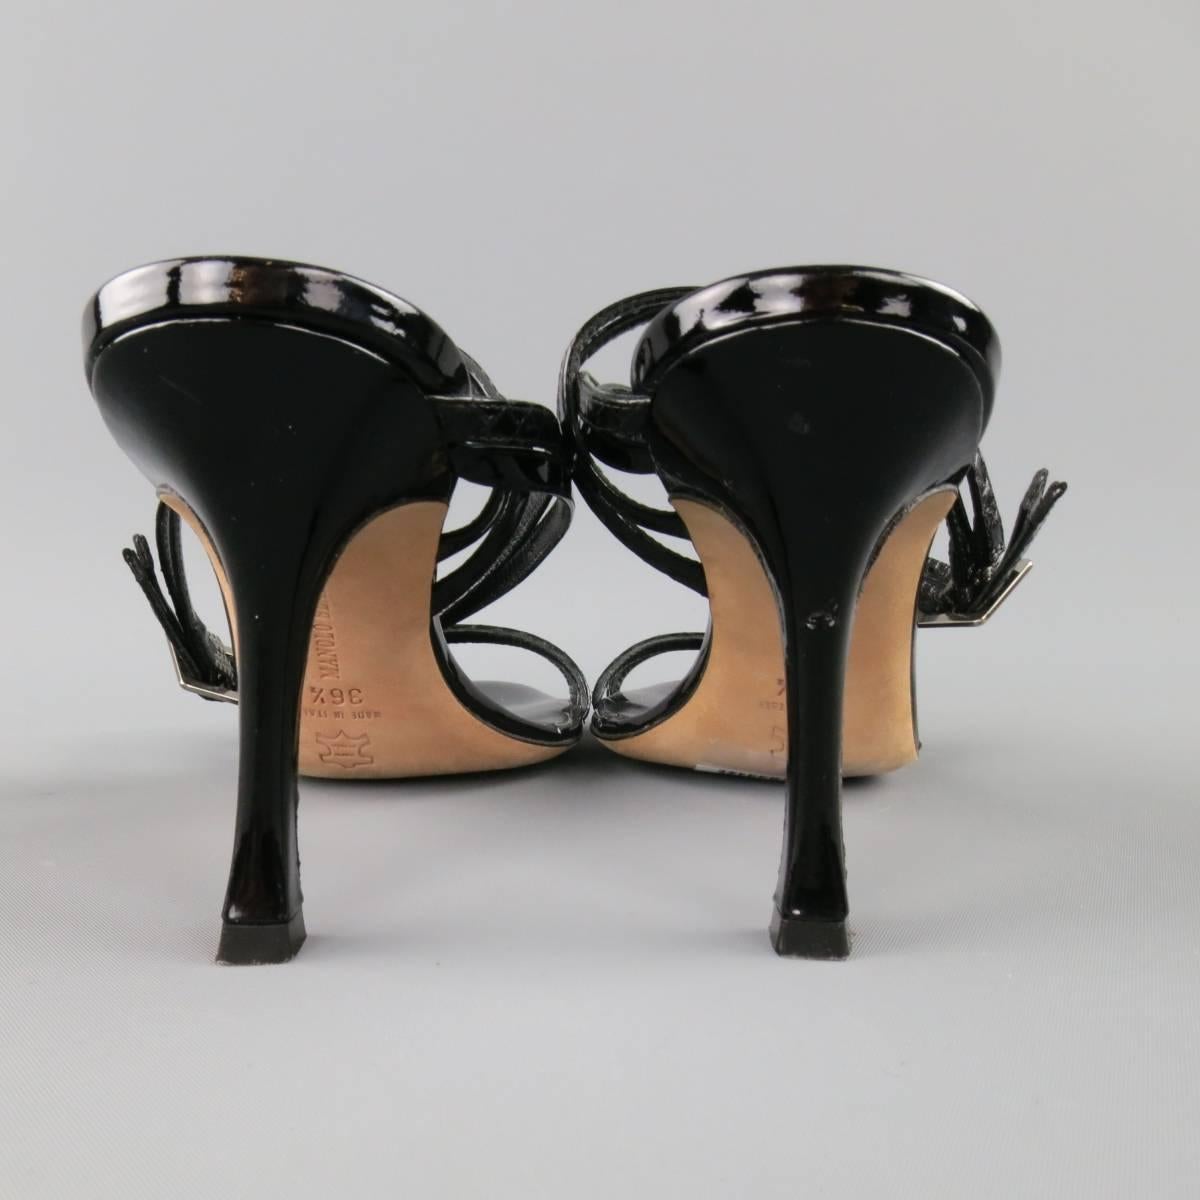 MANOLO BLAHNIK Size 6.5 Black Patent Snake Skin Leather Ankle Strap Sandals 3